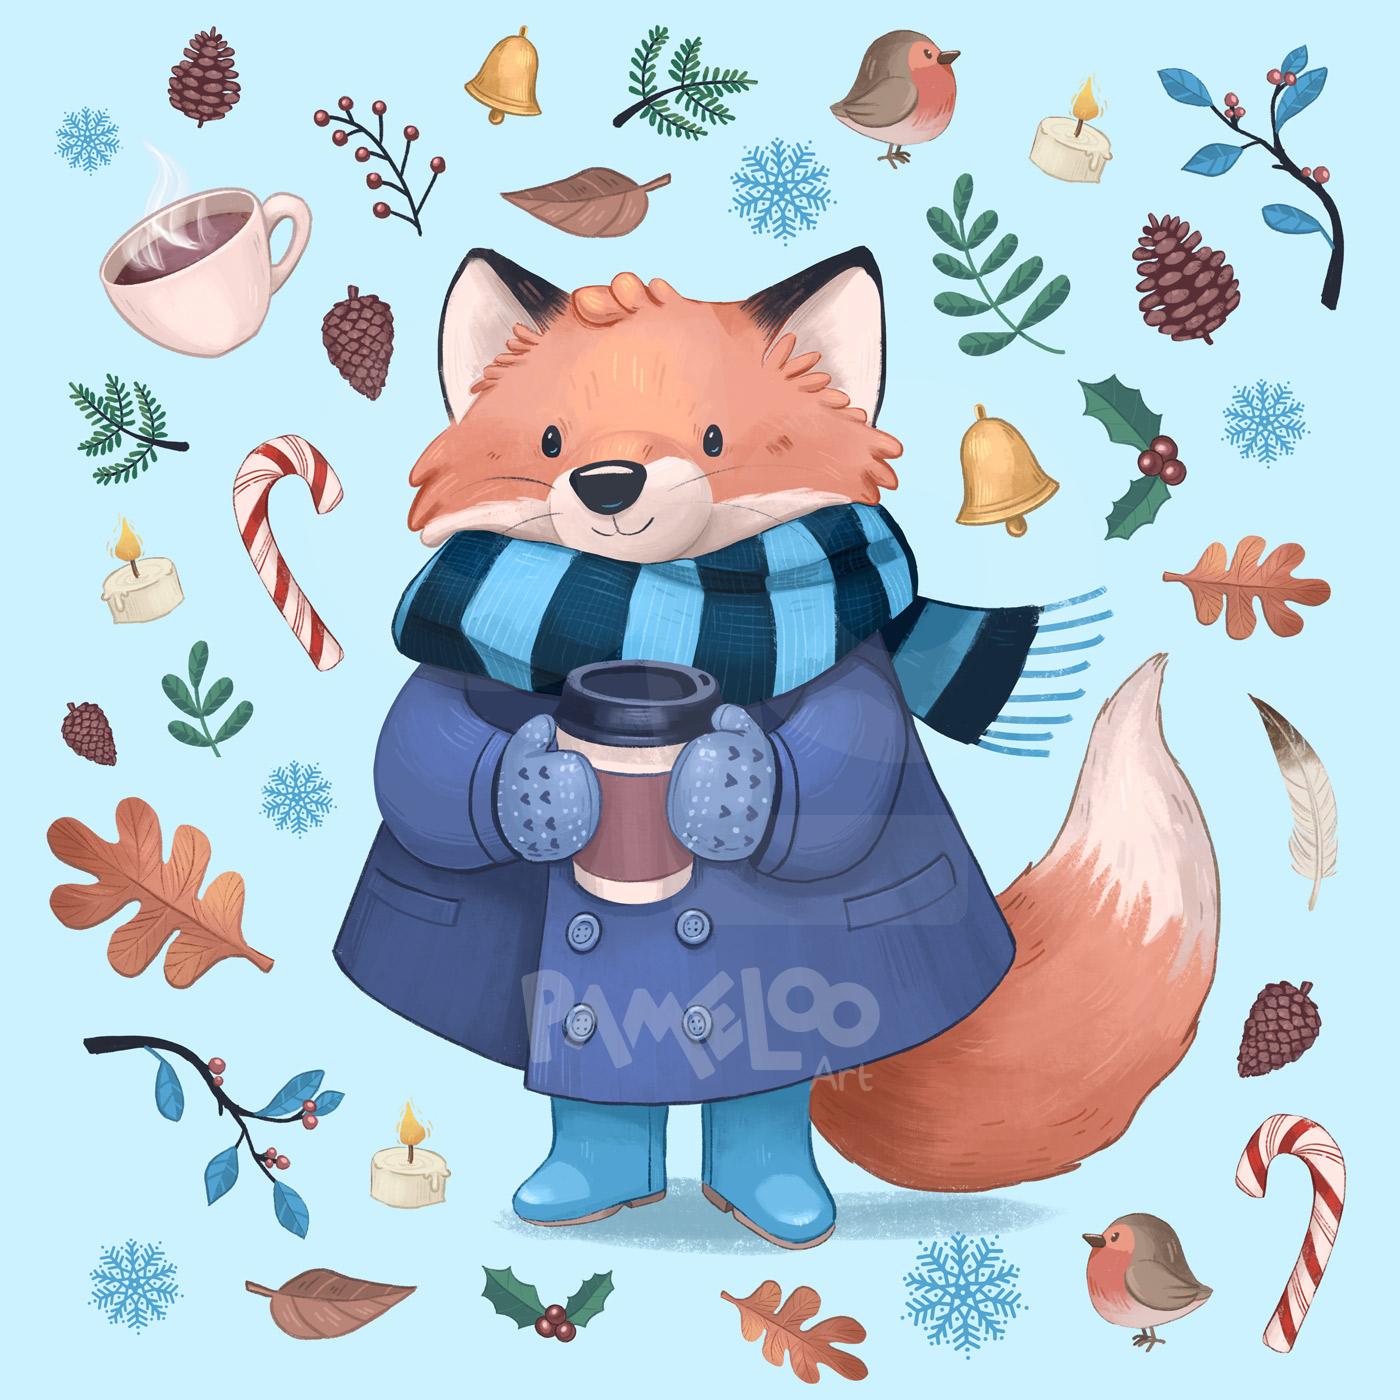 Winter Fox Warmest Wishes Card